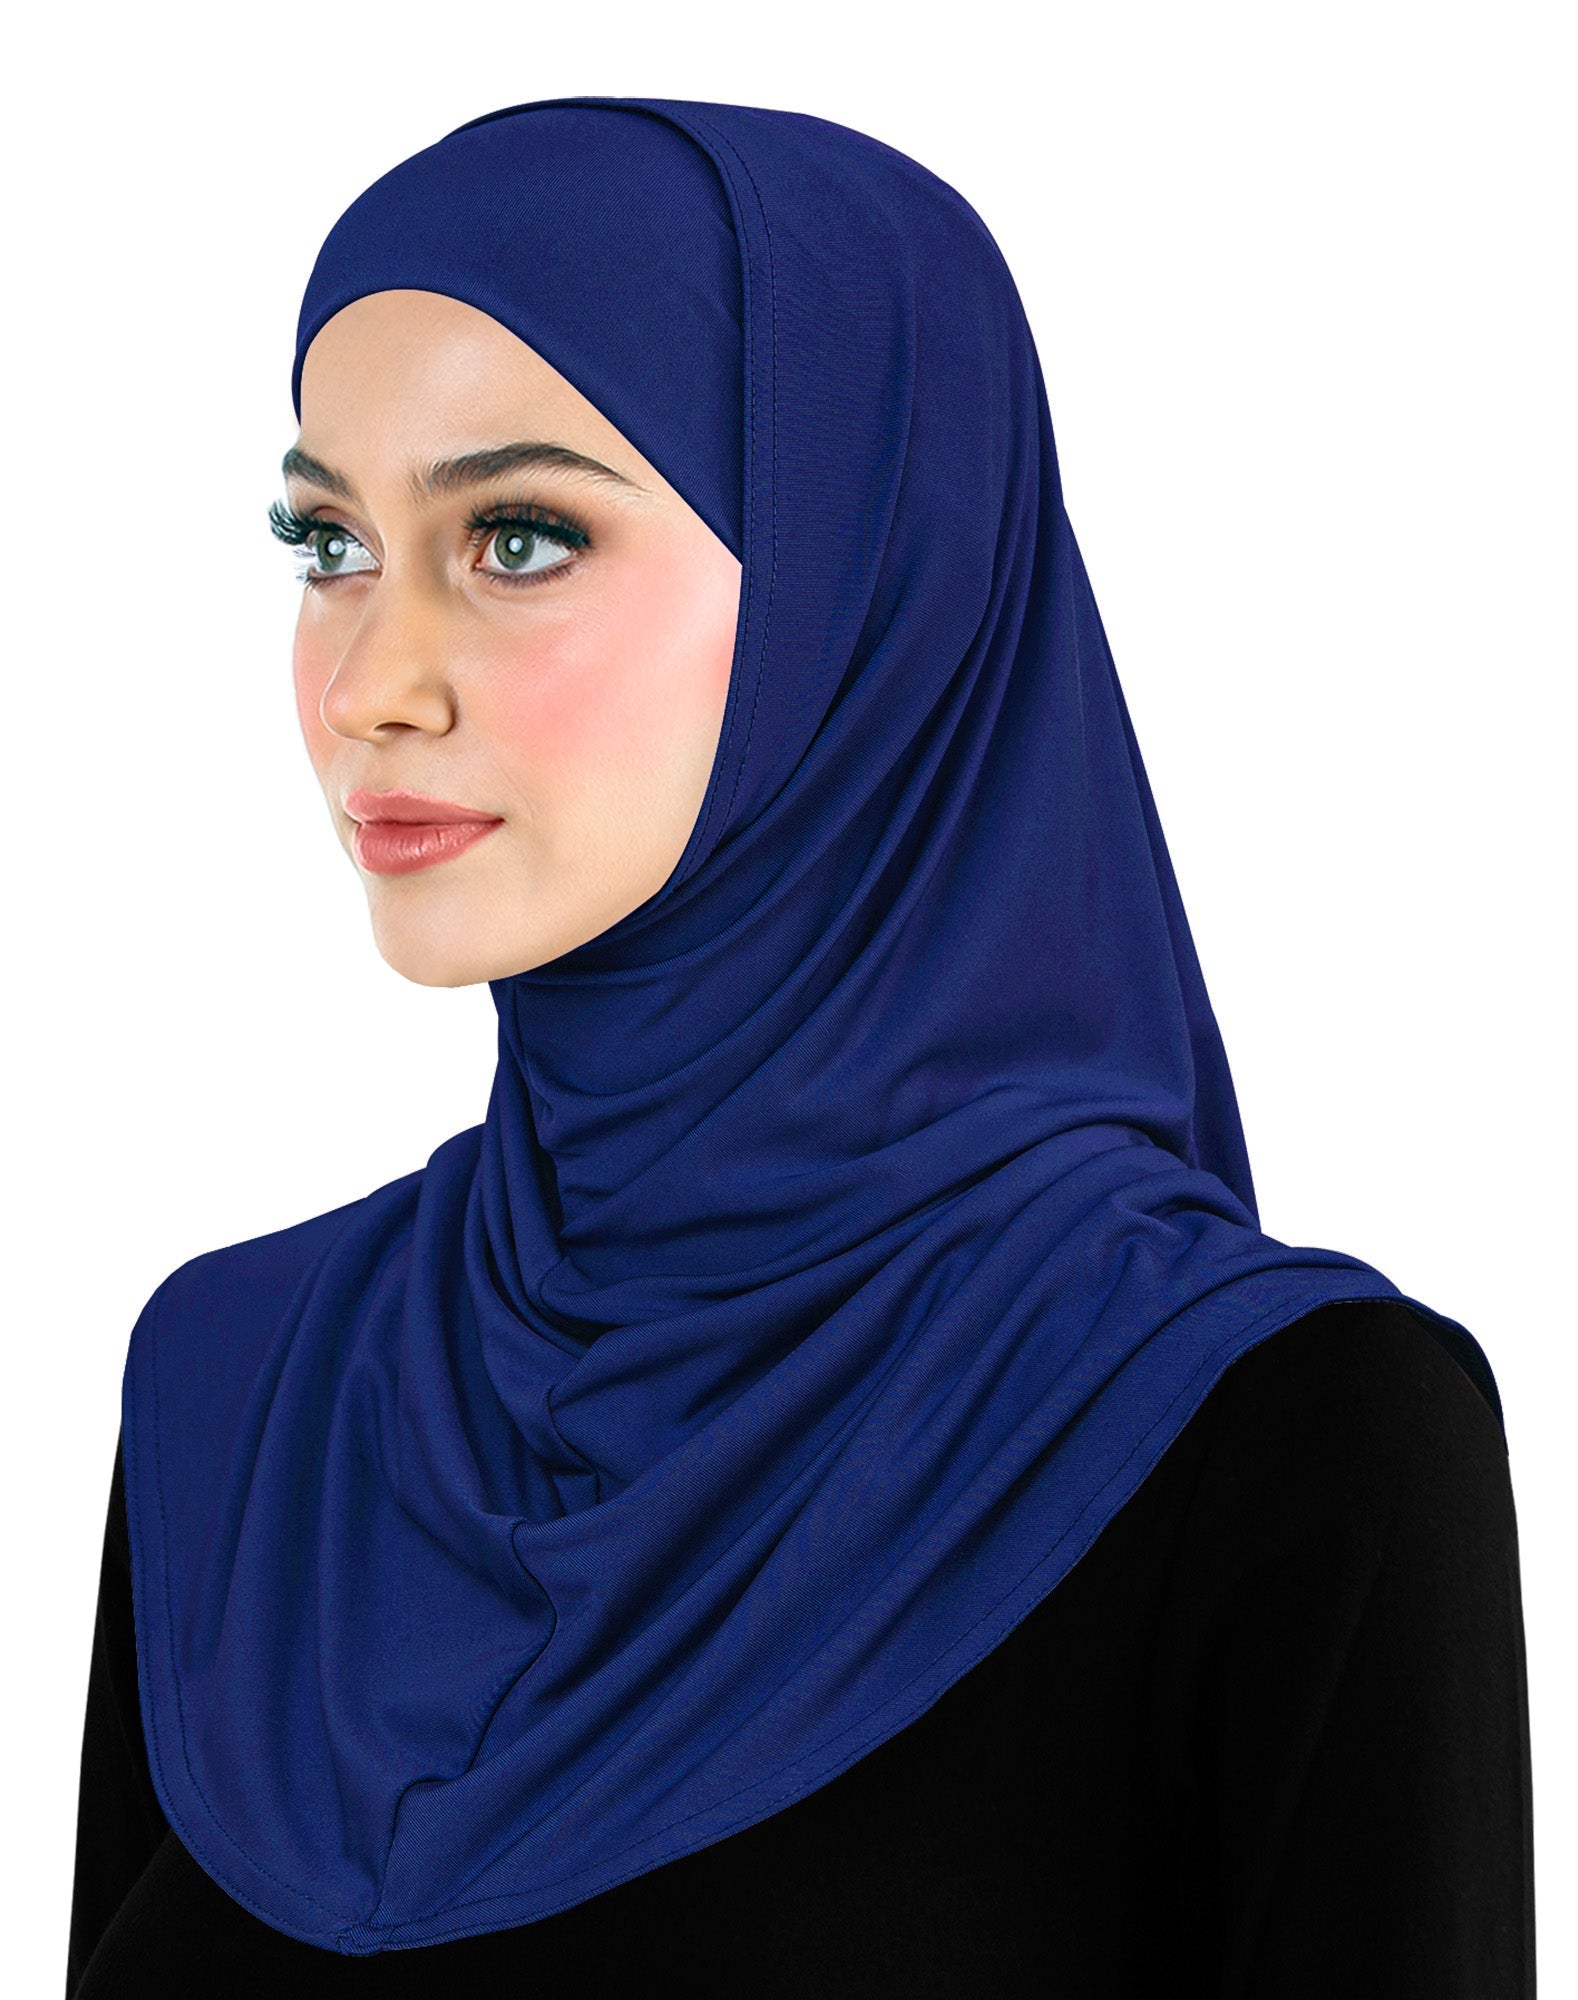 Royal Blue Lycra Amira hijab khatib 2 piece set includes hood and tube cap women's size